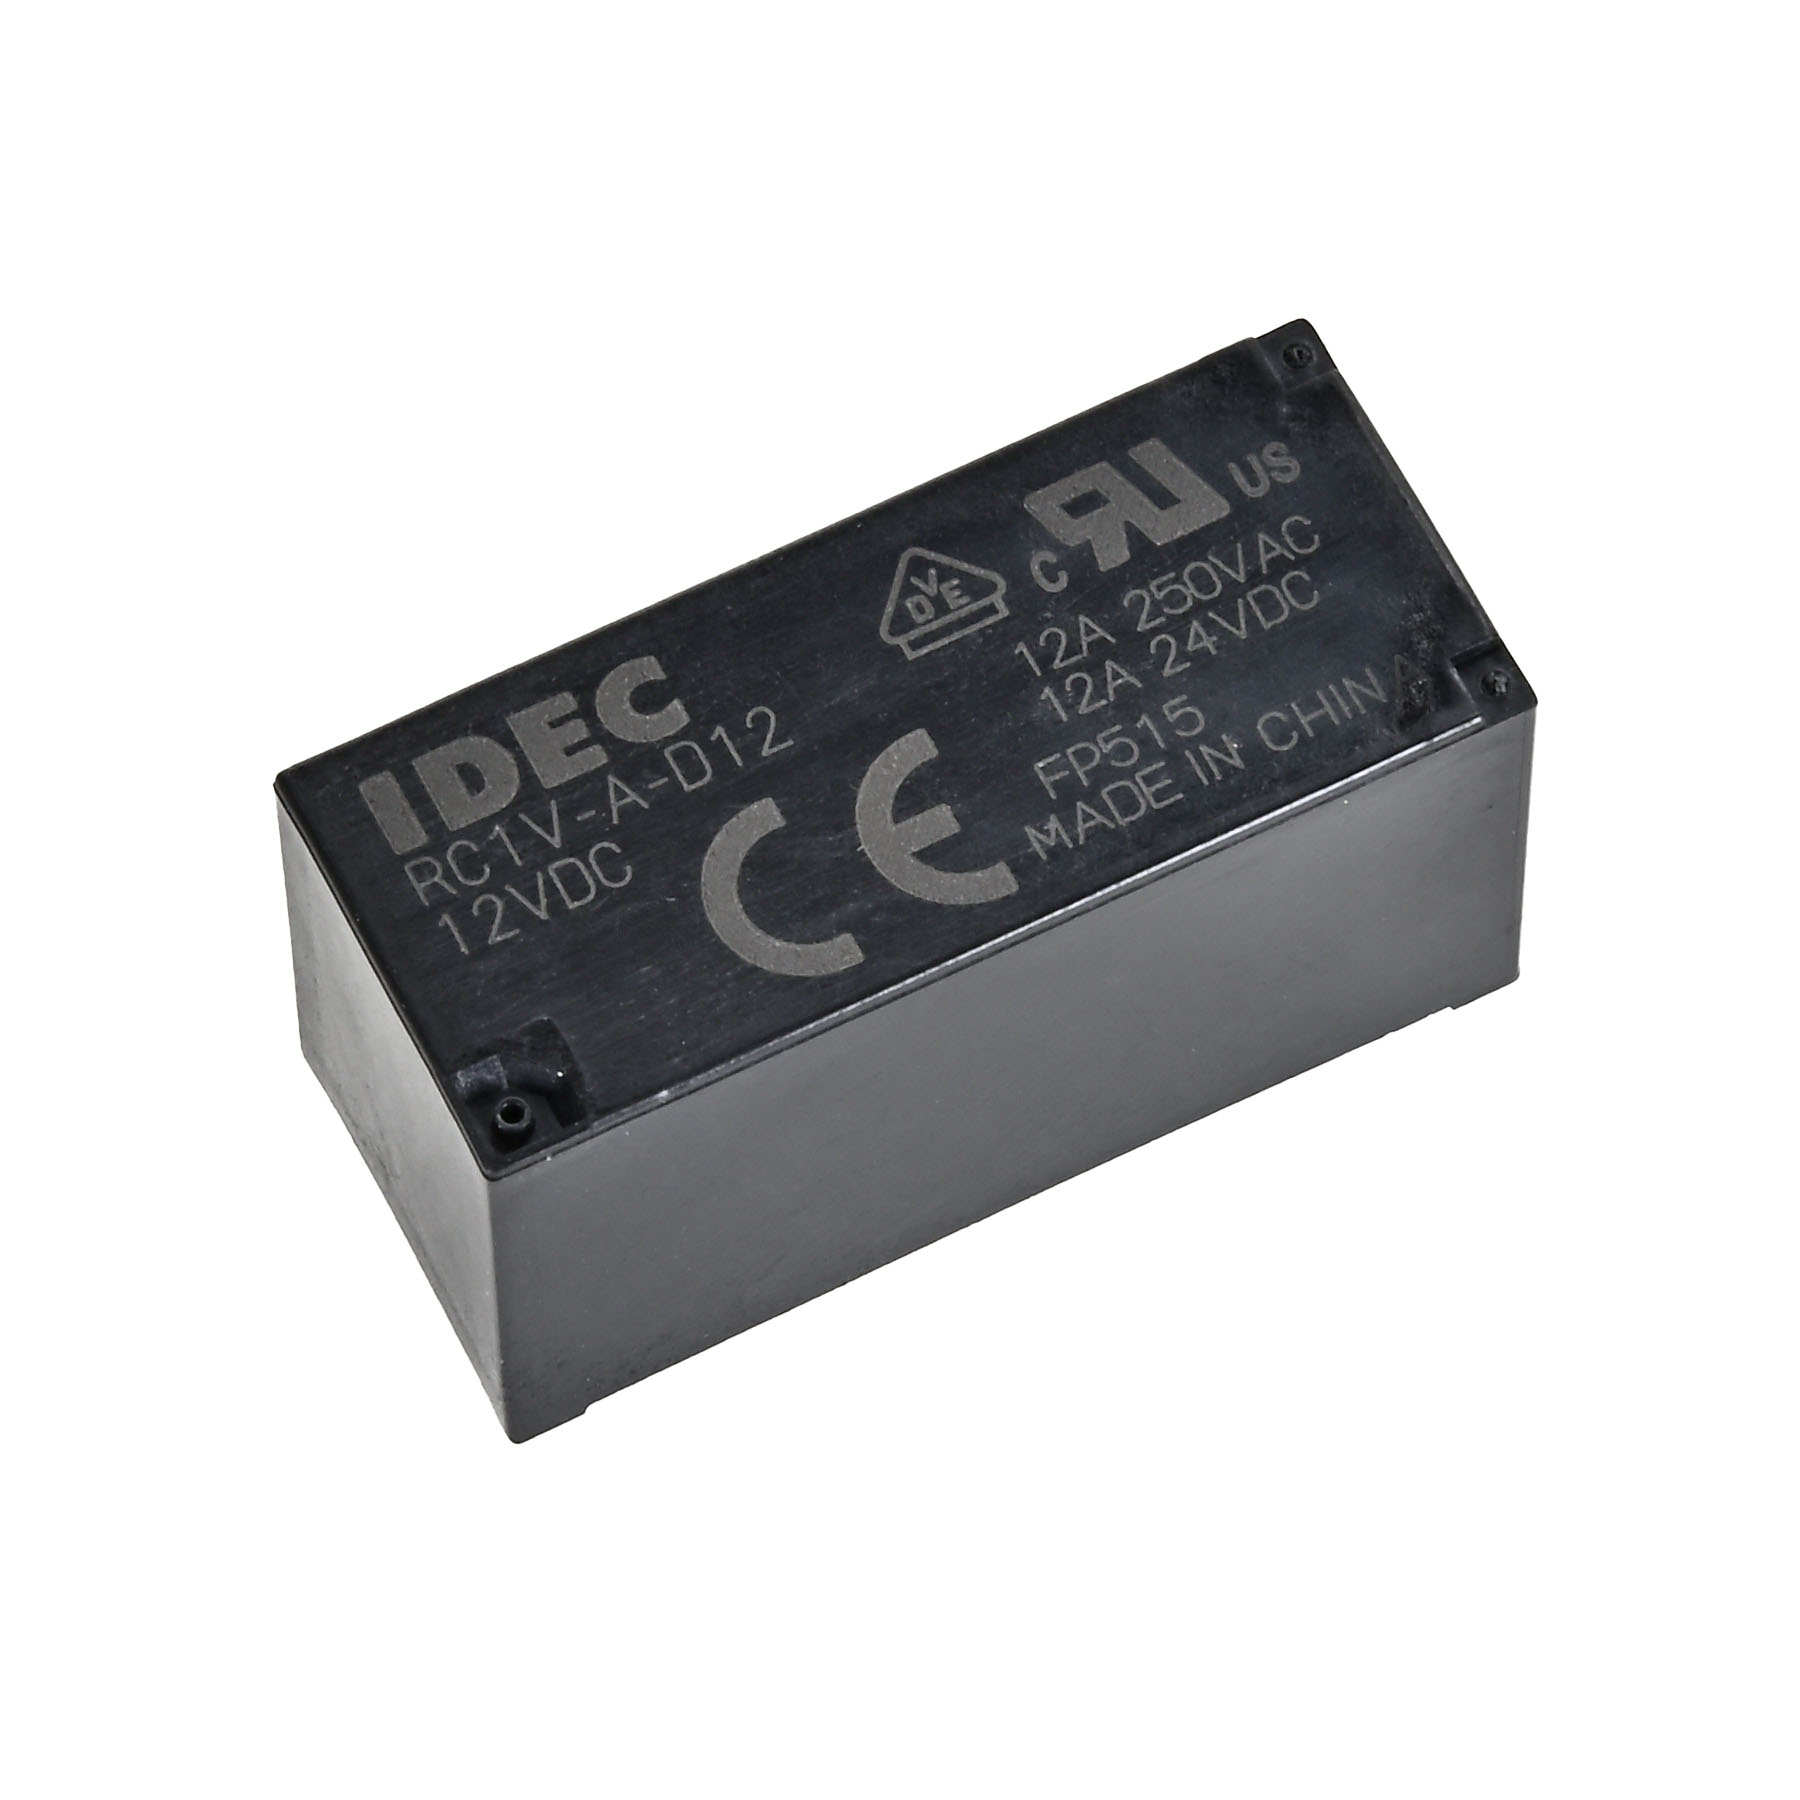 IDEC、制御機器向けプリント基板用リレー「RCシリーズ」発売 制御盤や制御部の小型化、省配線化に